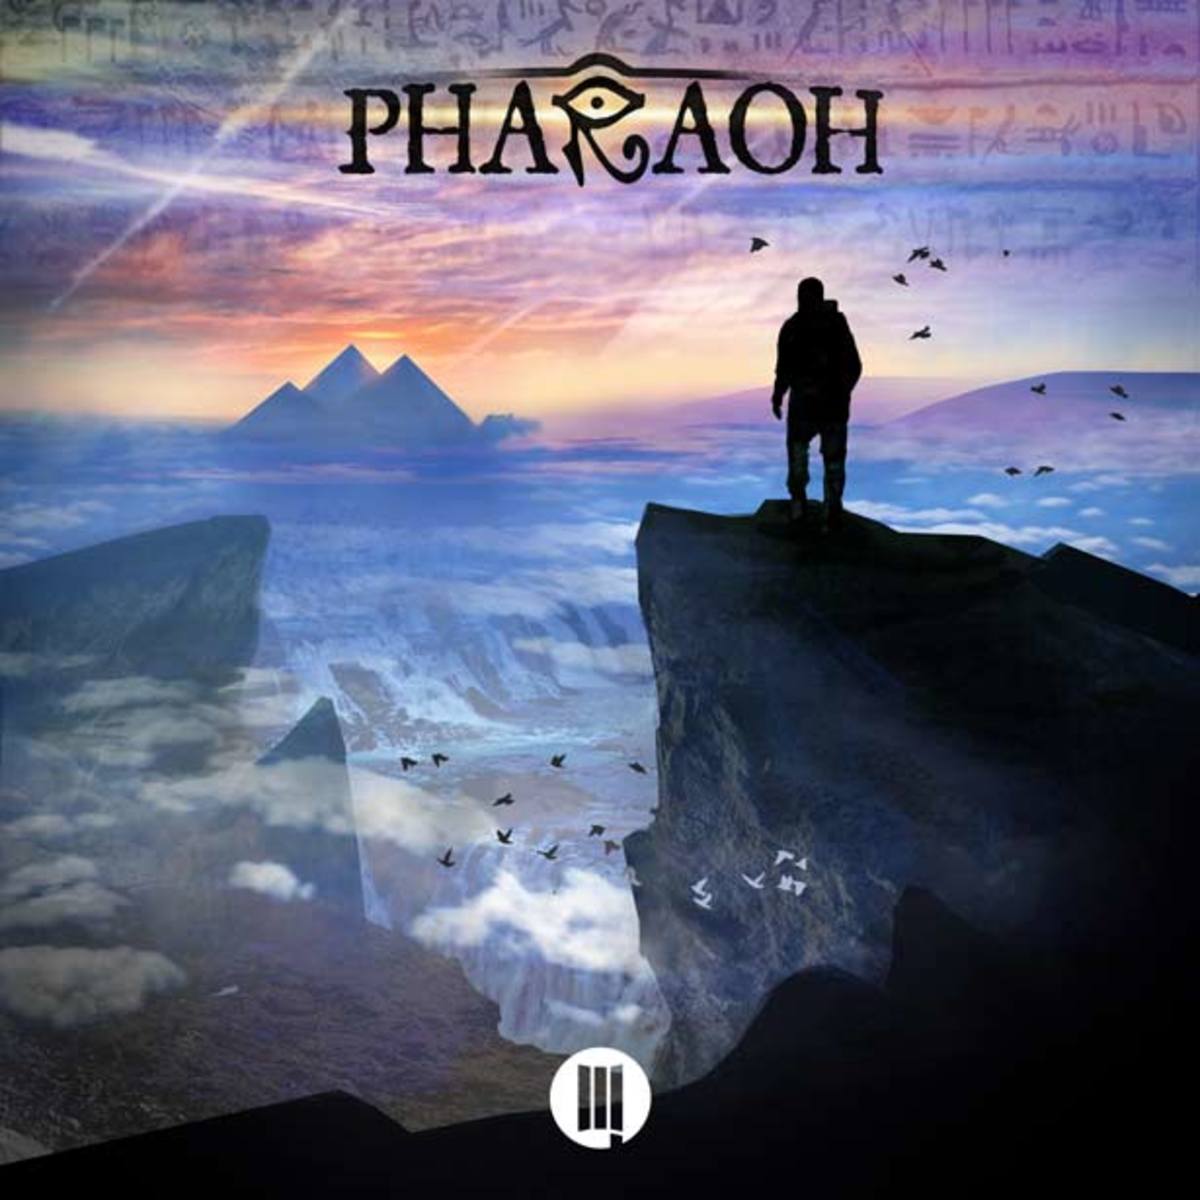 New Electronic Music: Pyramyth's Pharaoh EP- File Under 'Dubstep'